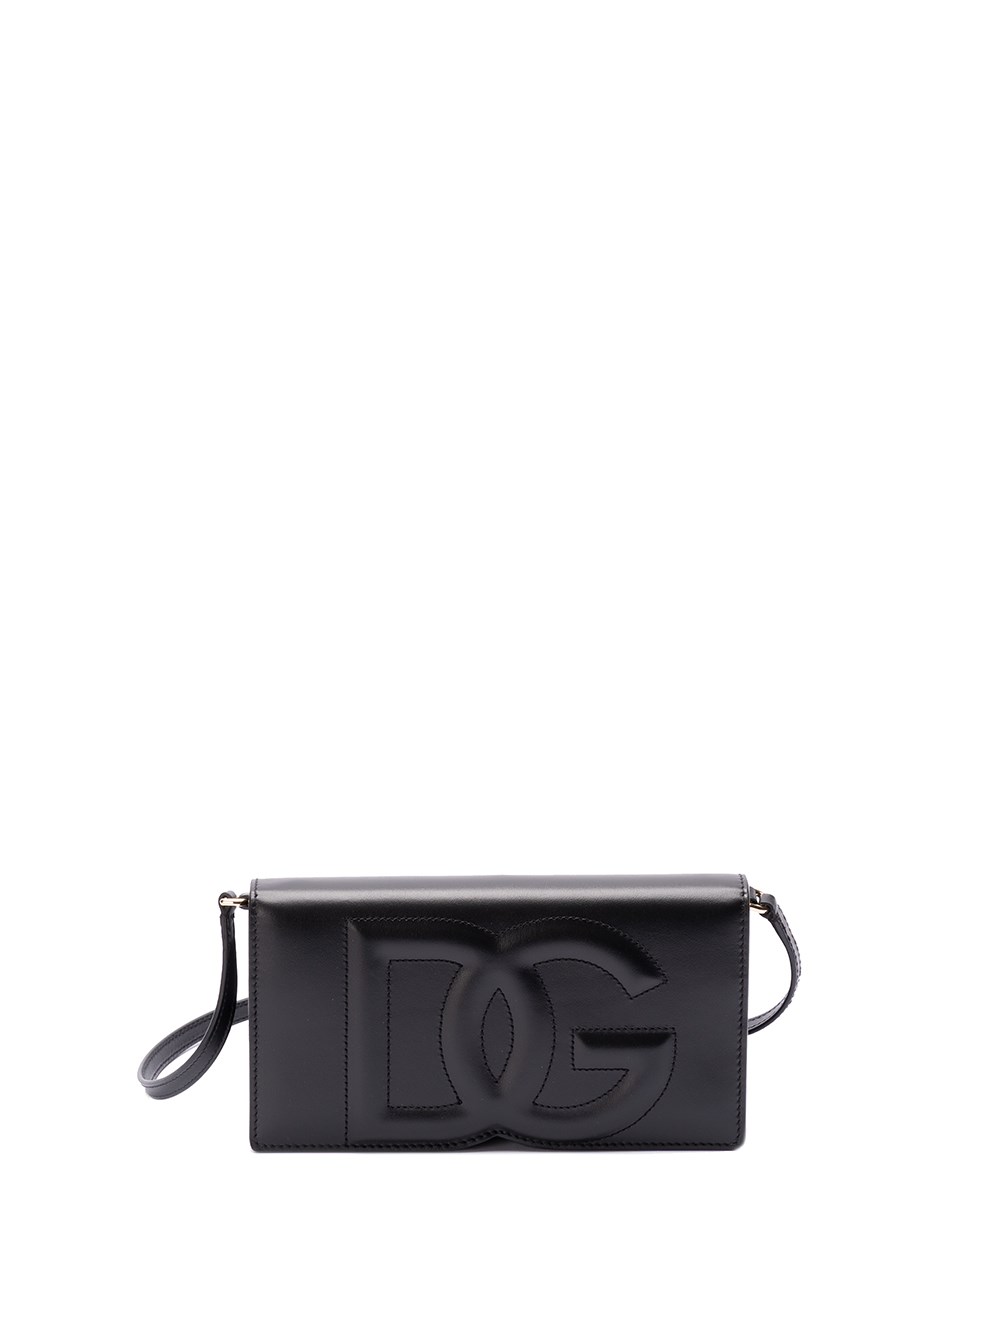 Dolce & Gabbana Phone Bag In Black  